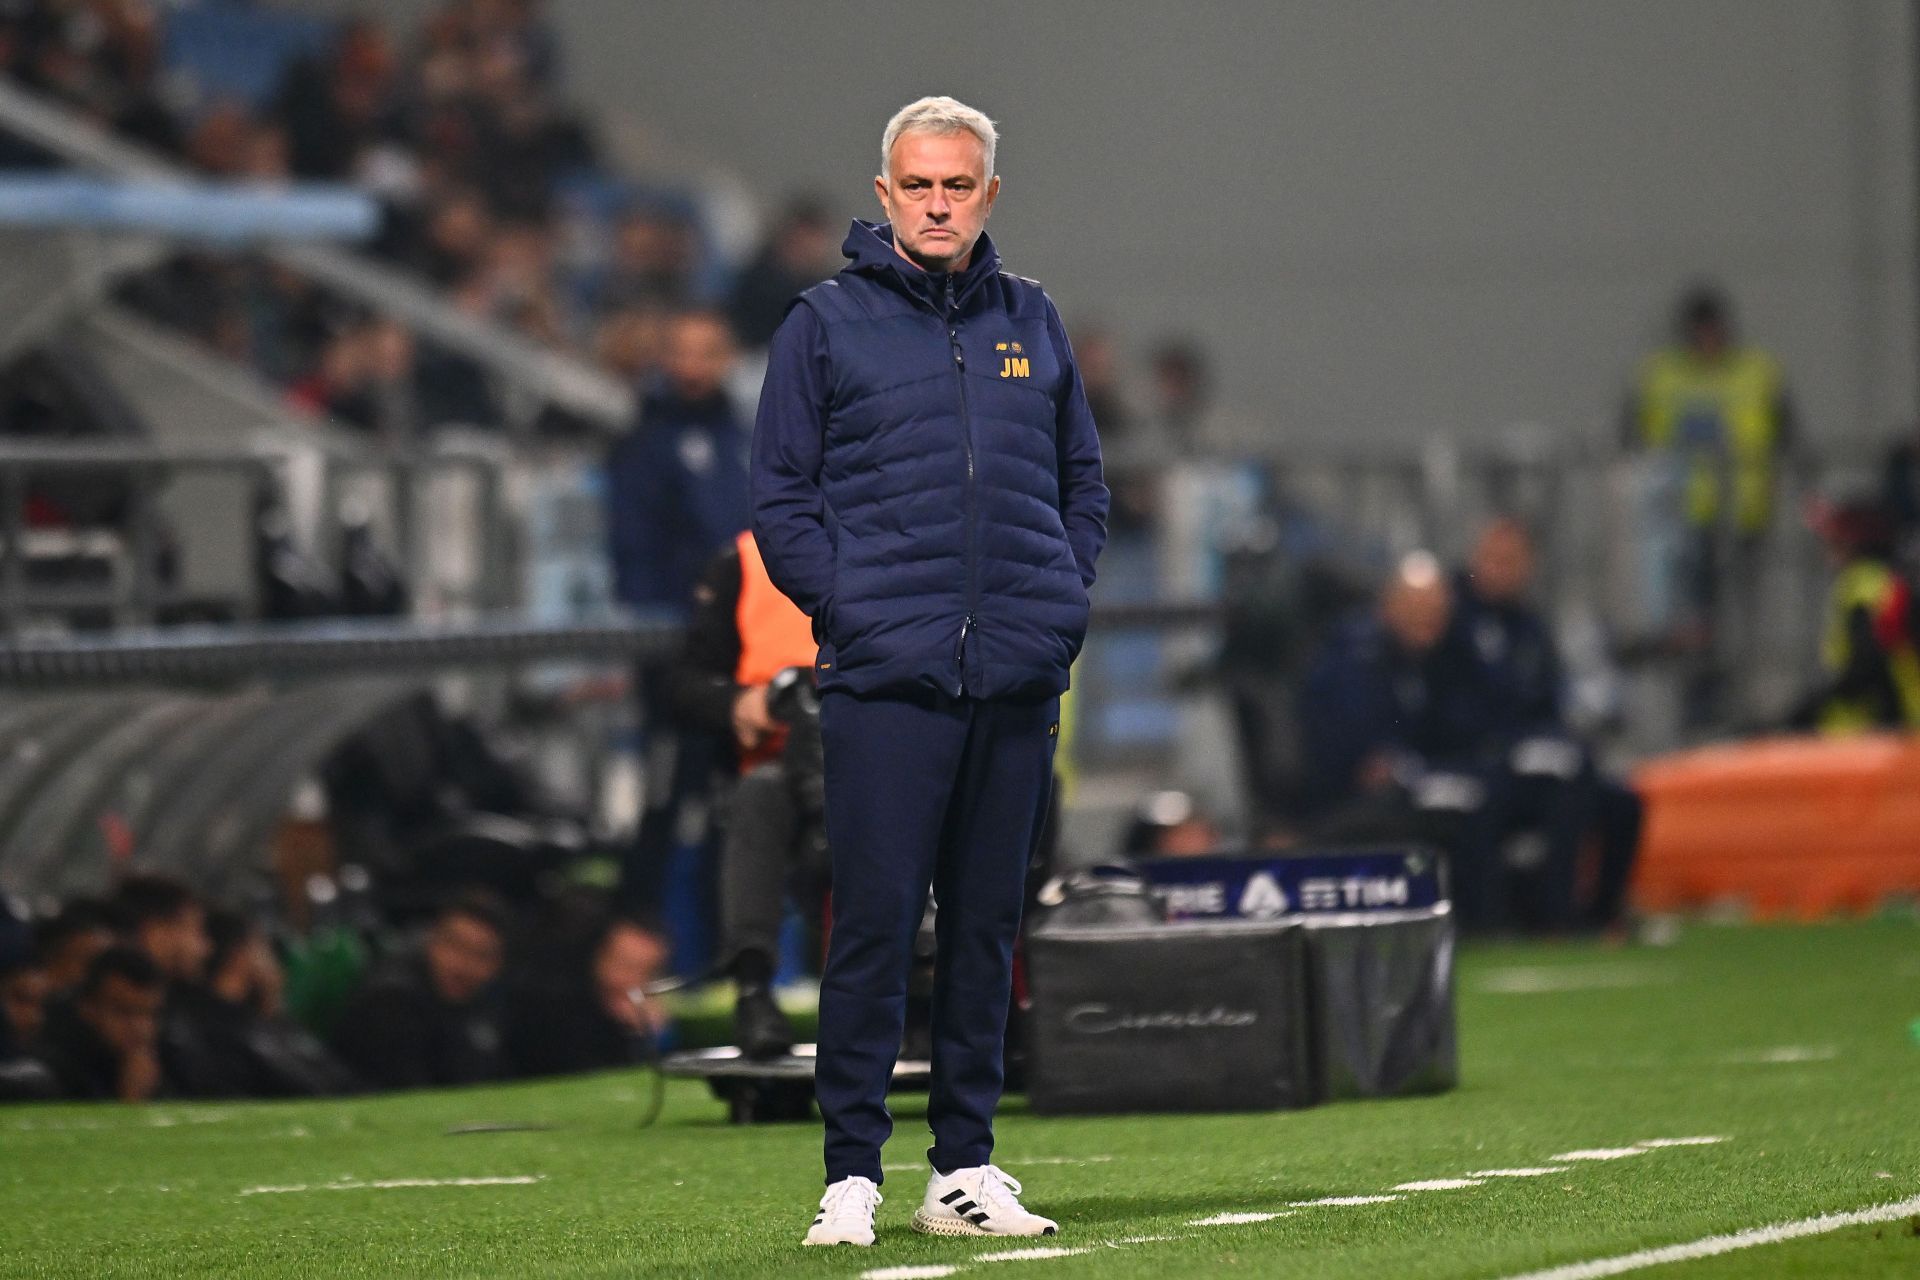 Jose Mourinho has taken AS Roma on a rejuvenating run.